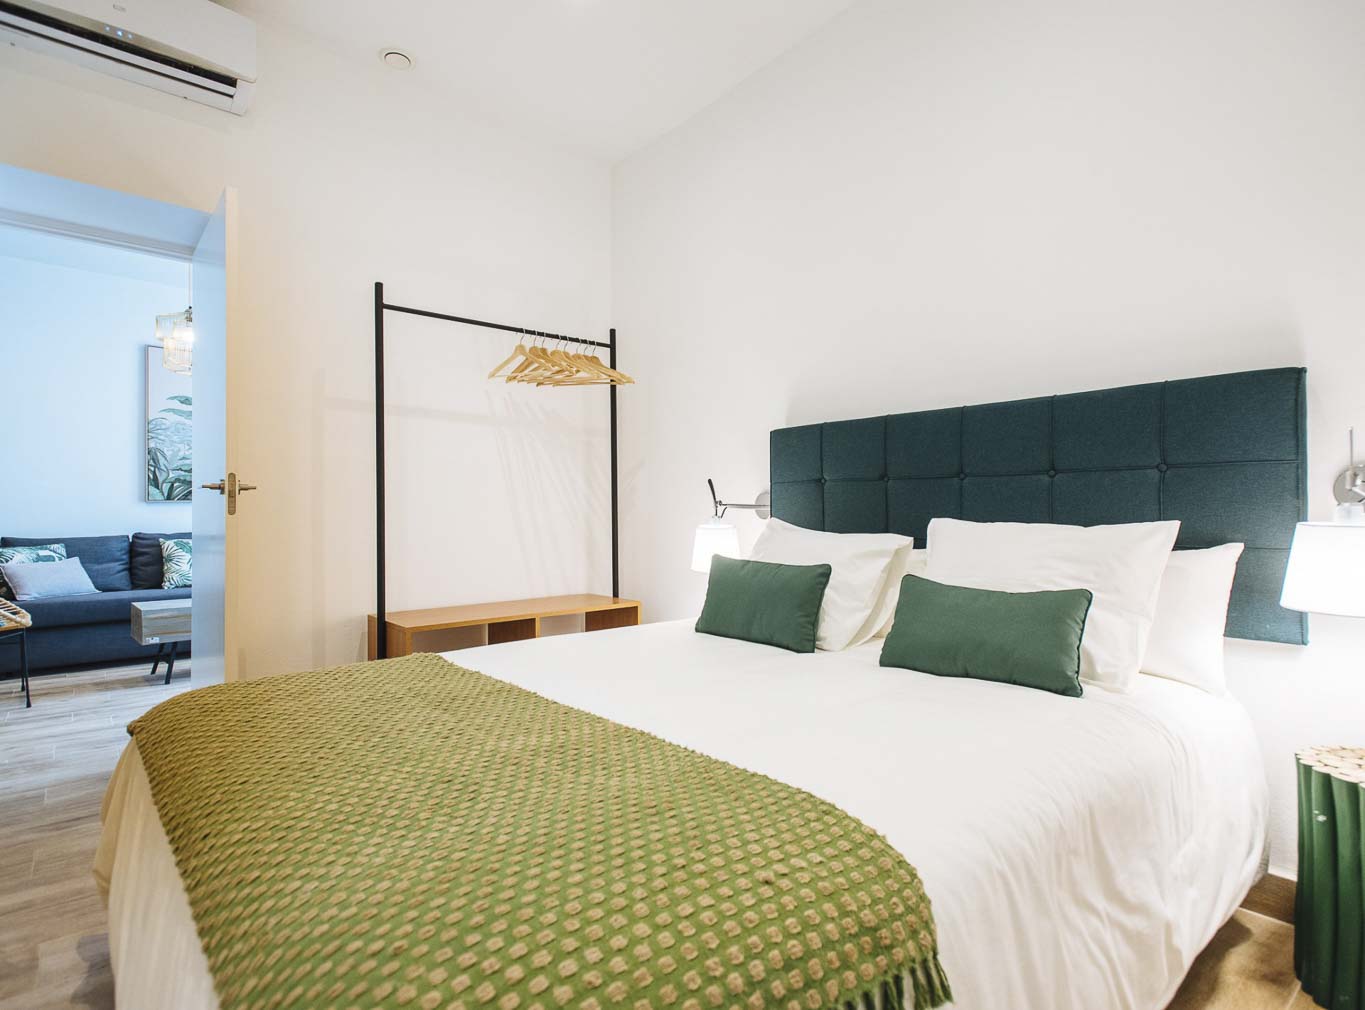 Tourist apartments comfortable bedroom